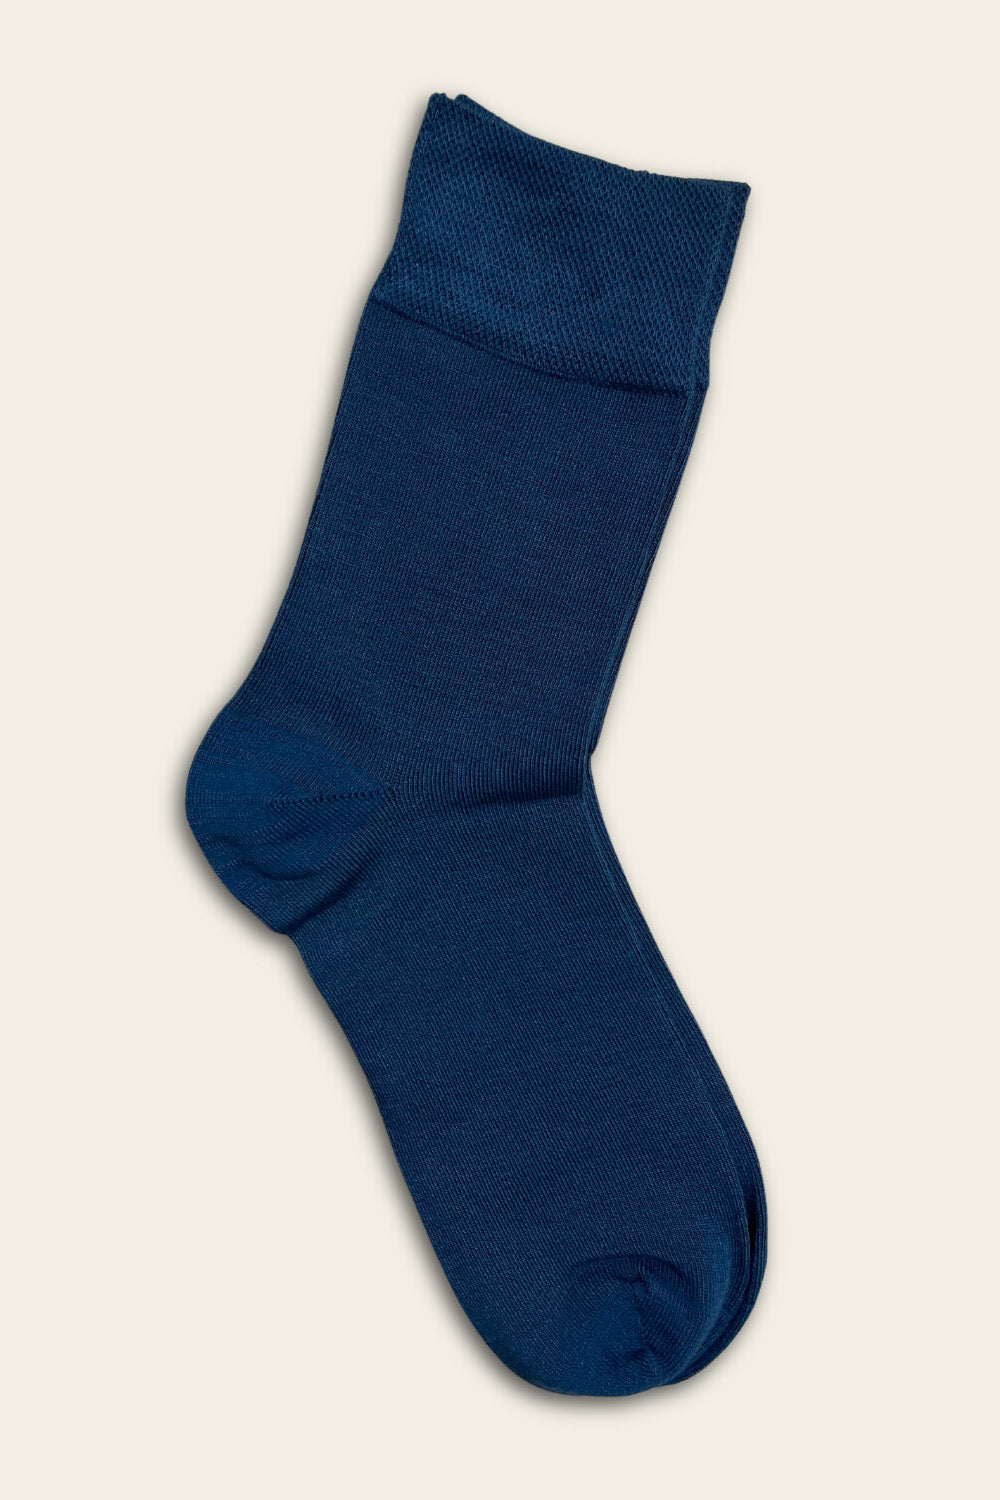 Seamless Bamboo Socks - Red, Navy Blue, Green - 6 pairs